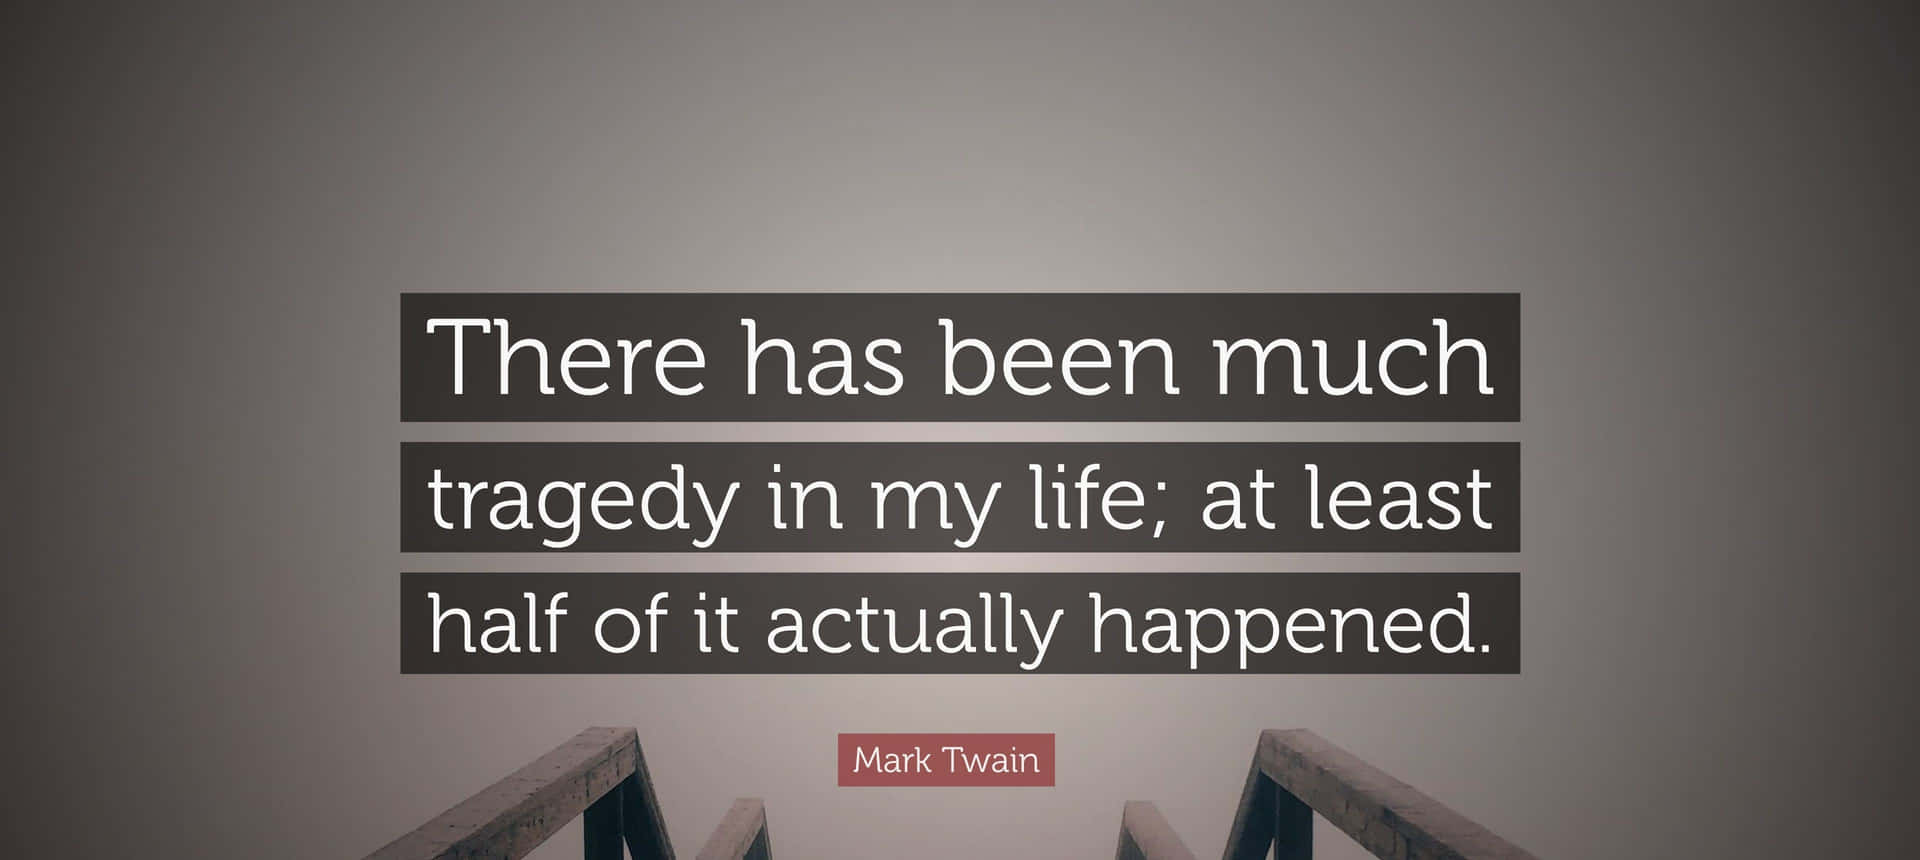 Mark Twain Tragedy Quote Wallpaper